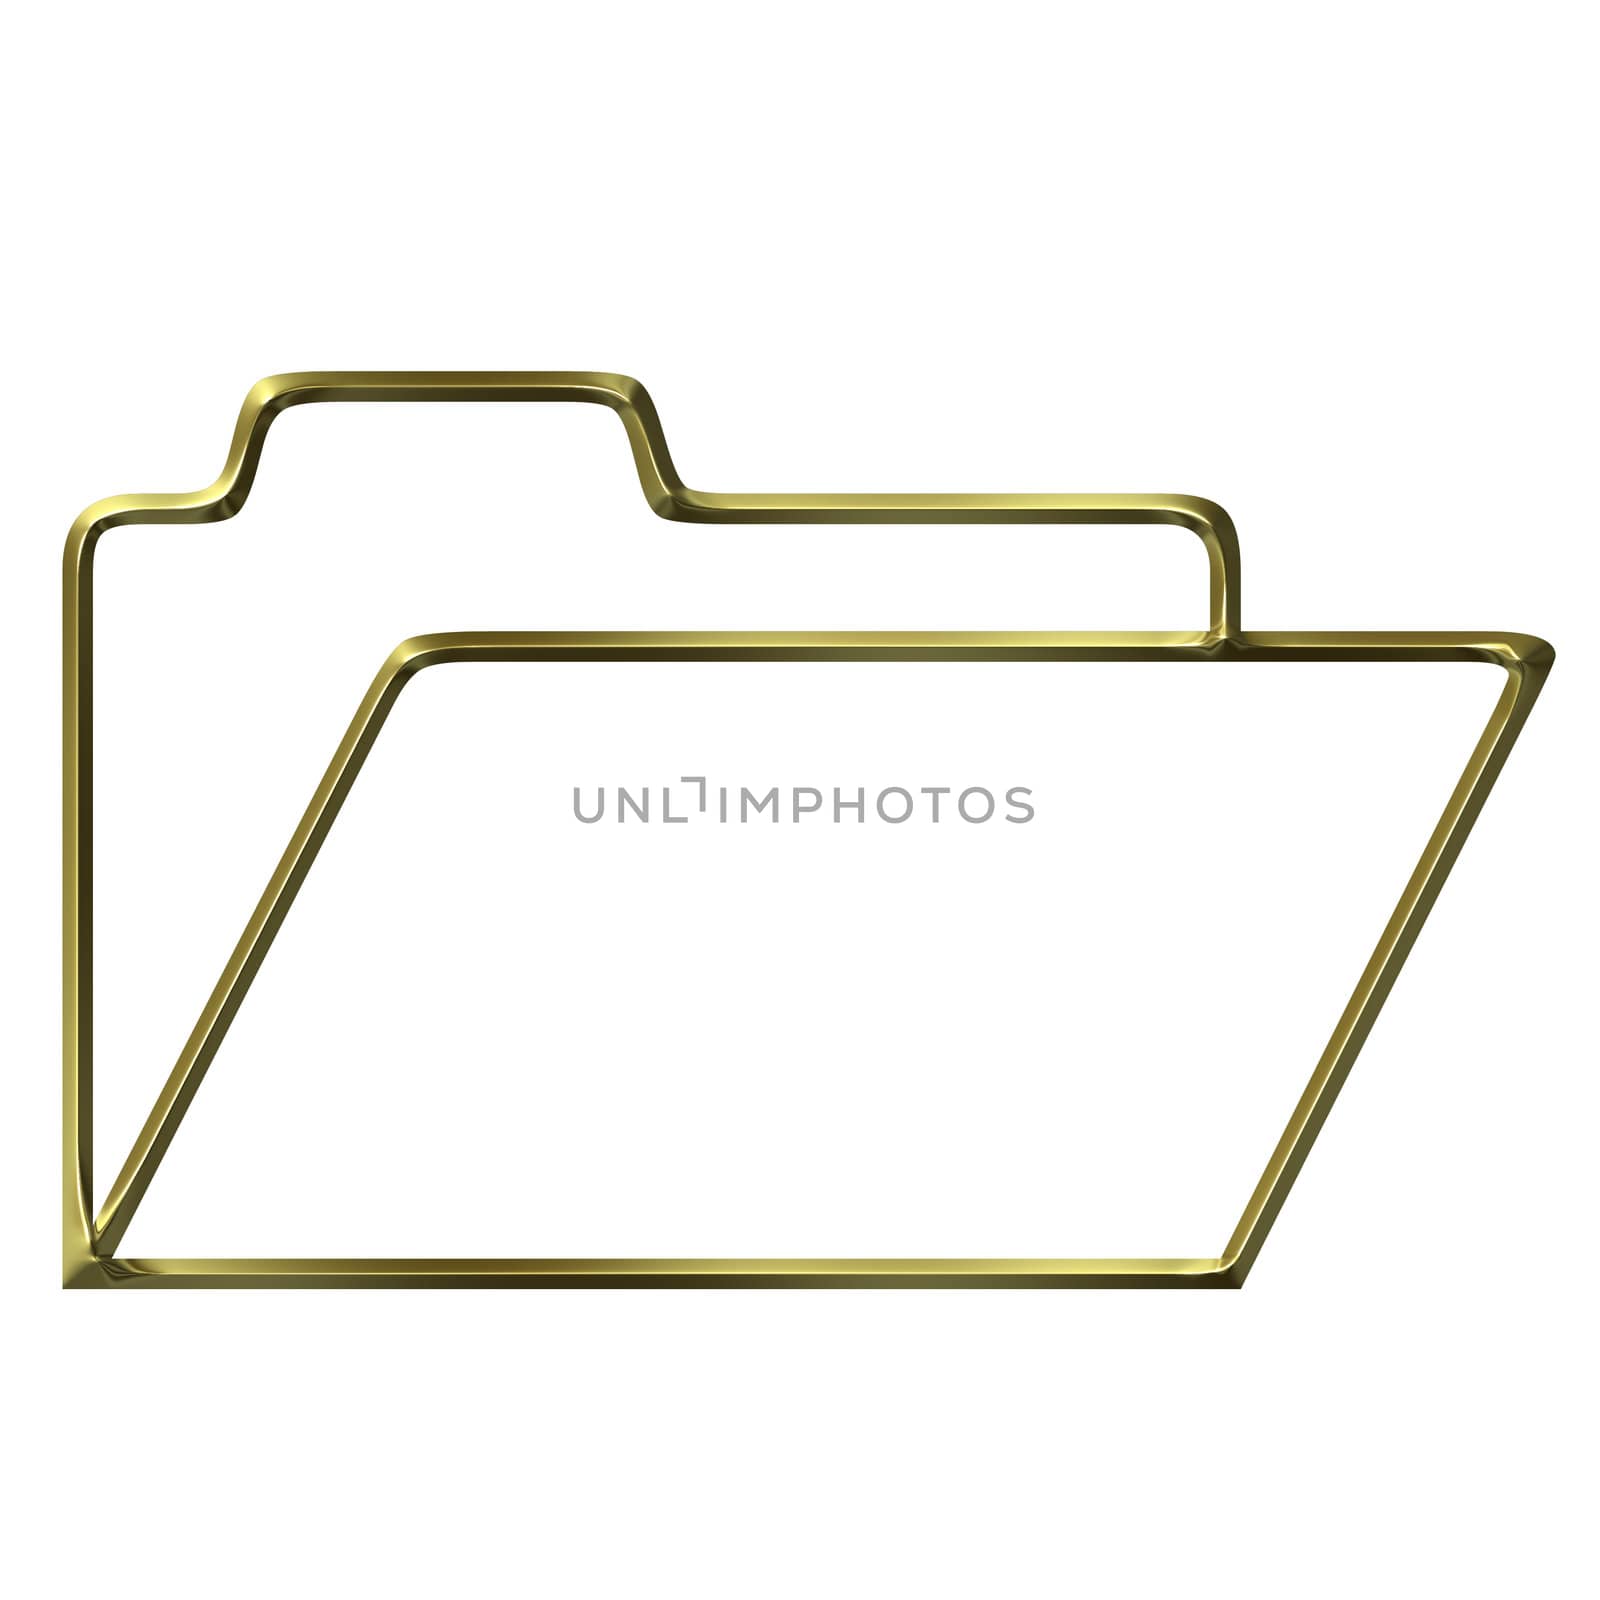 3d golden opened folder silhouette isolated in white